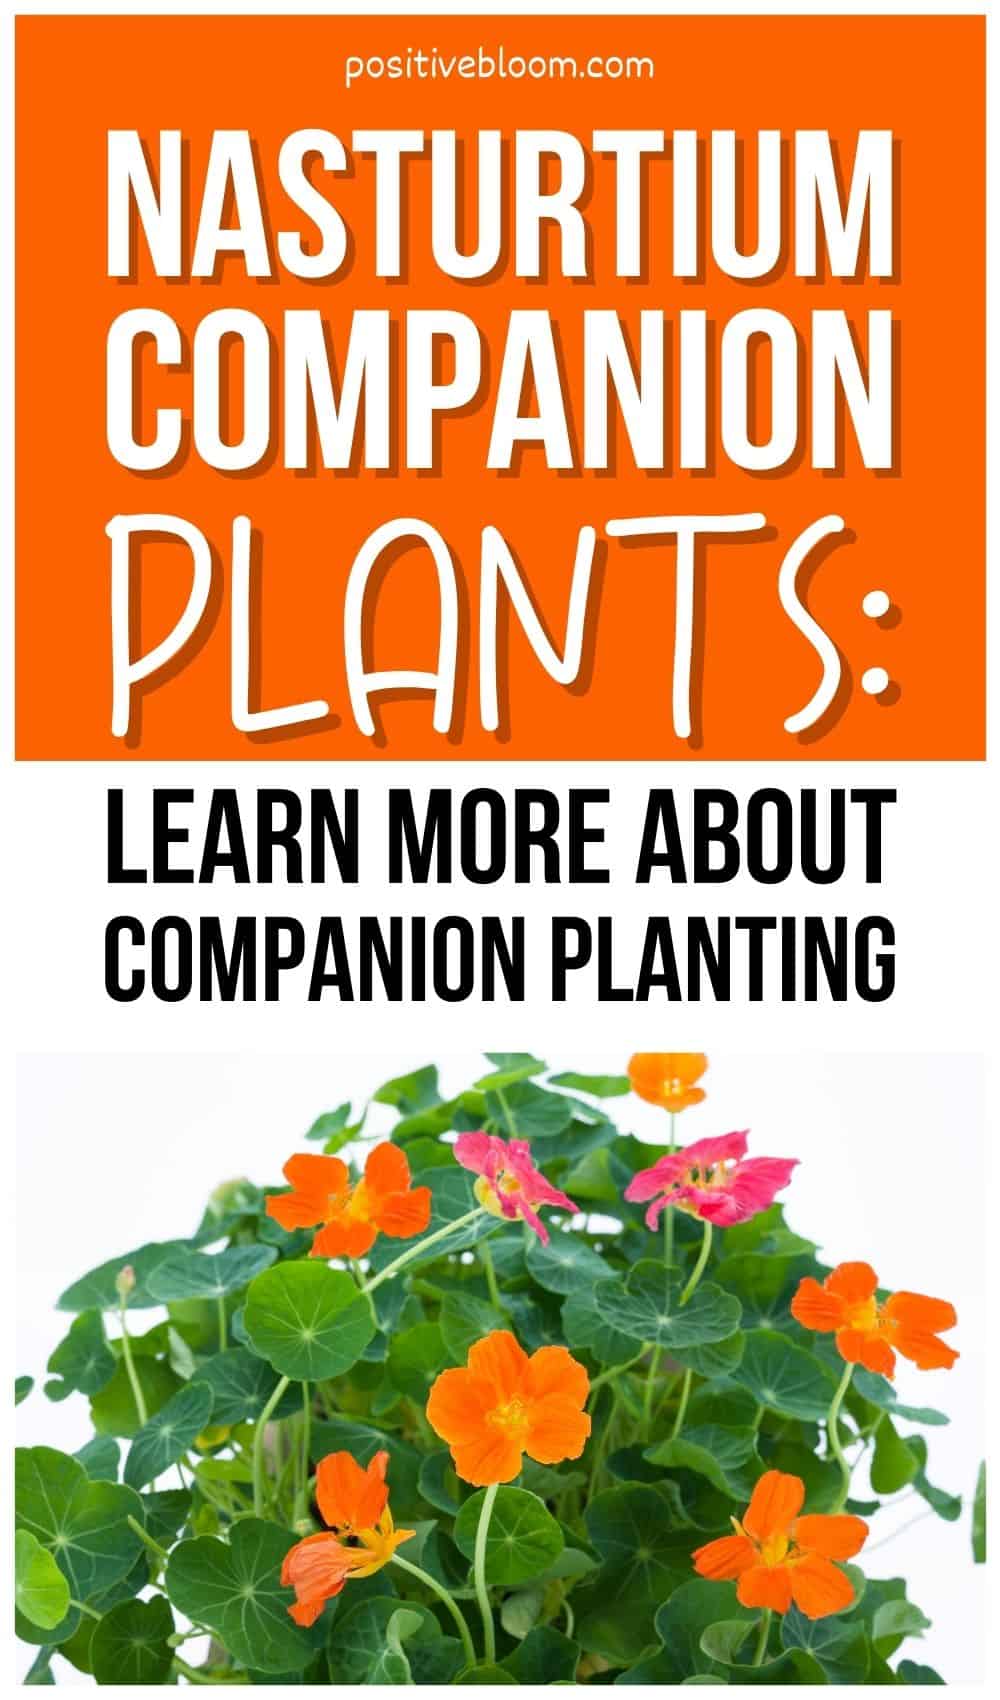 Nasturtium Companion Plants Learn More About Companion Planting